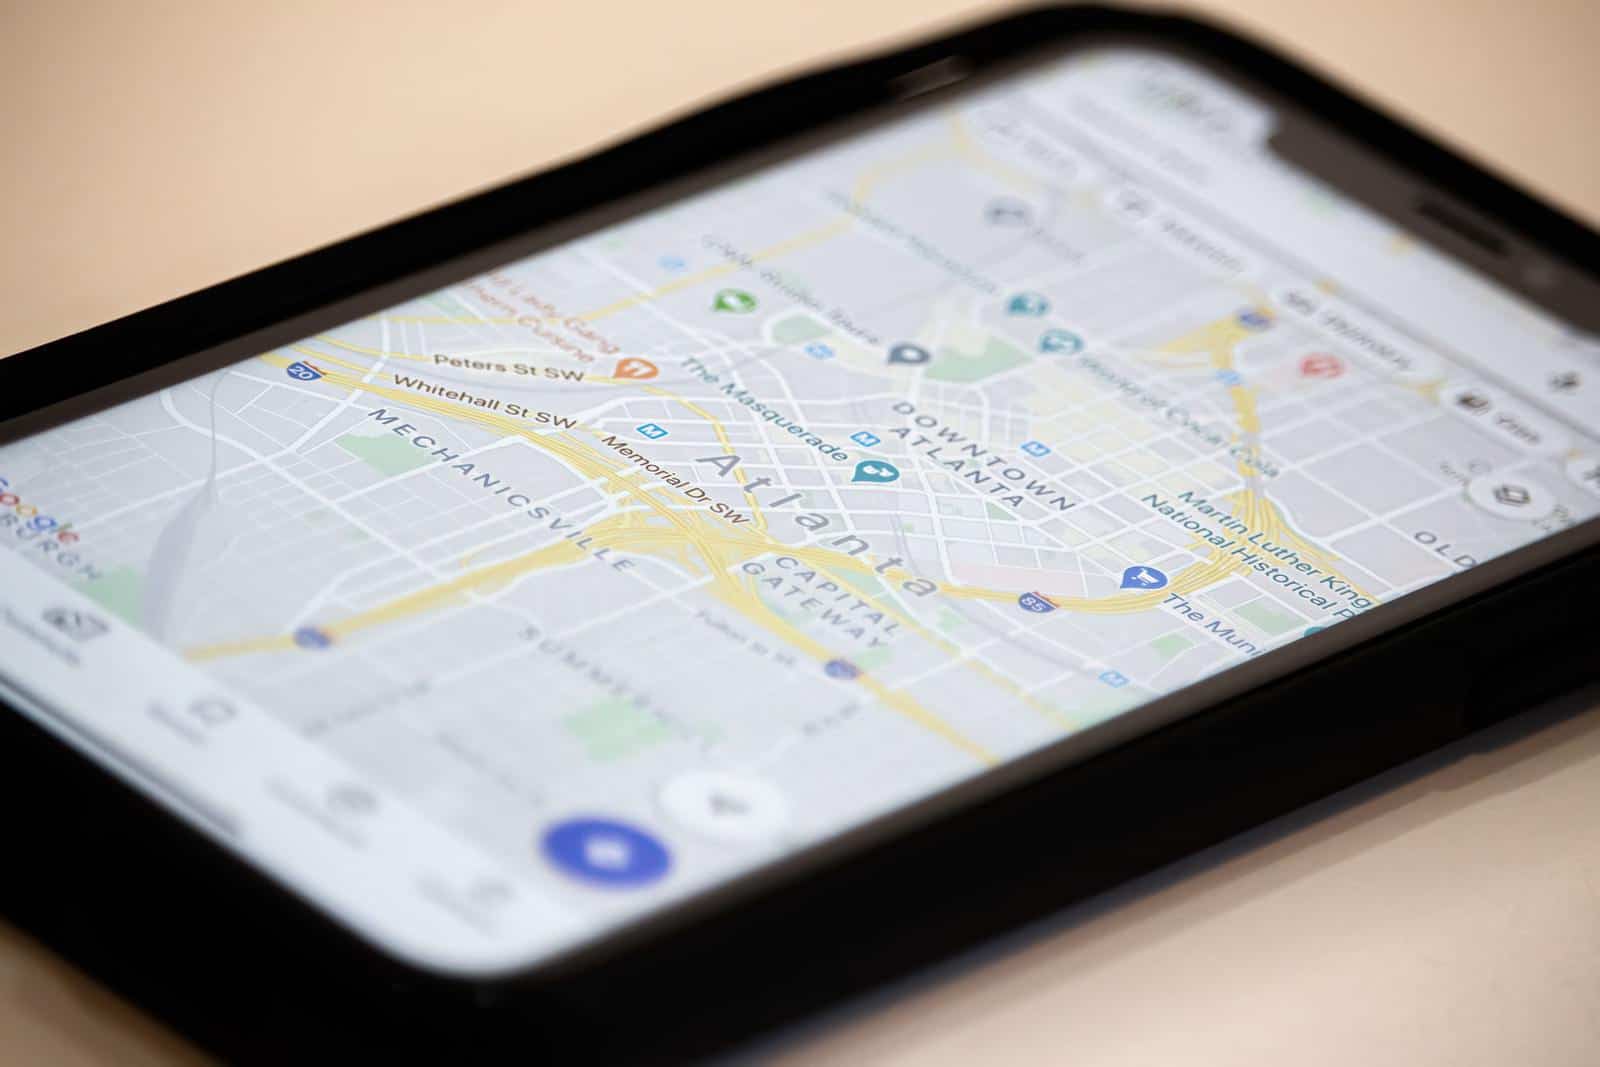 Google maps on smartphone